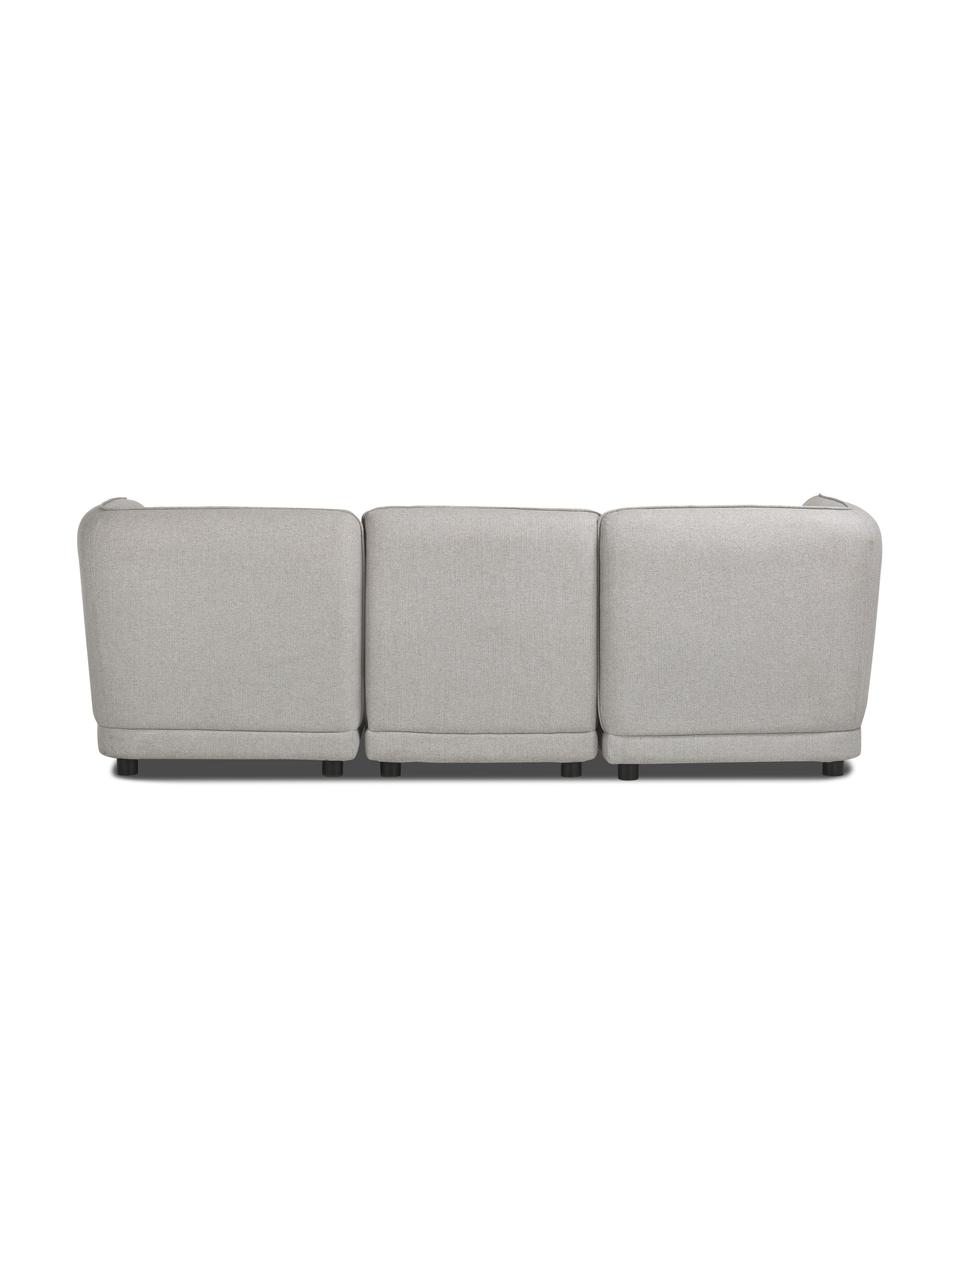 Modulares 3-Sitzer Sofa Ari in Grau, Bezug: 100% Polyester Der hochwe, Gestell: Massivholz, Sperrholz, Füße: Kunststoff, Webstoff Grau, B 228 x T 77 cm